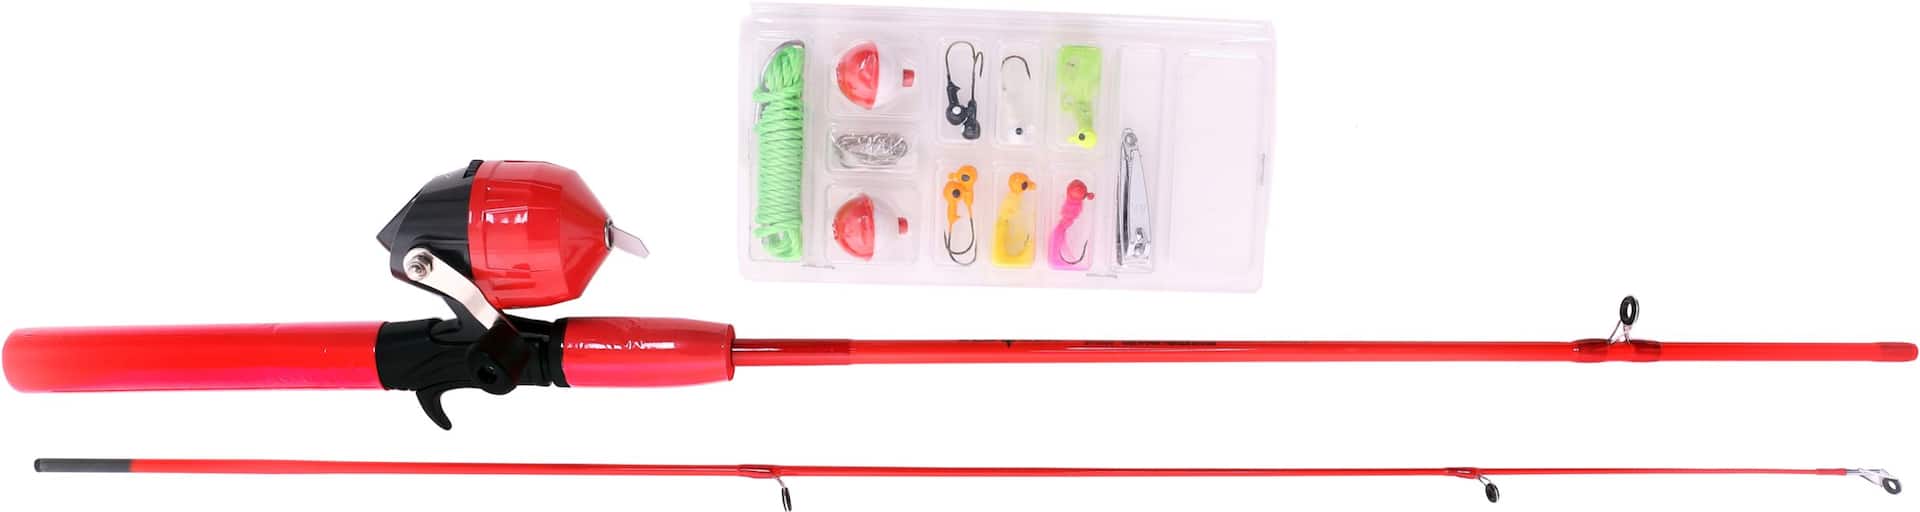 Starter Kit (reel maintenance lubricant) – Anglers Central